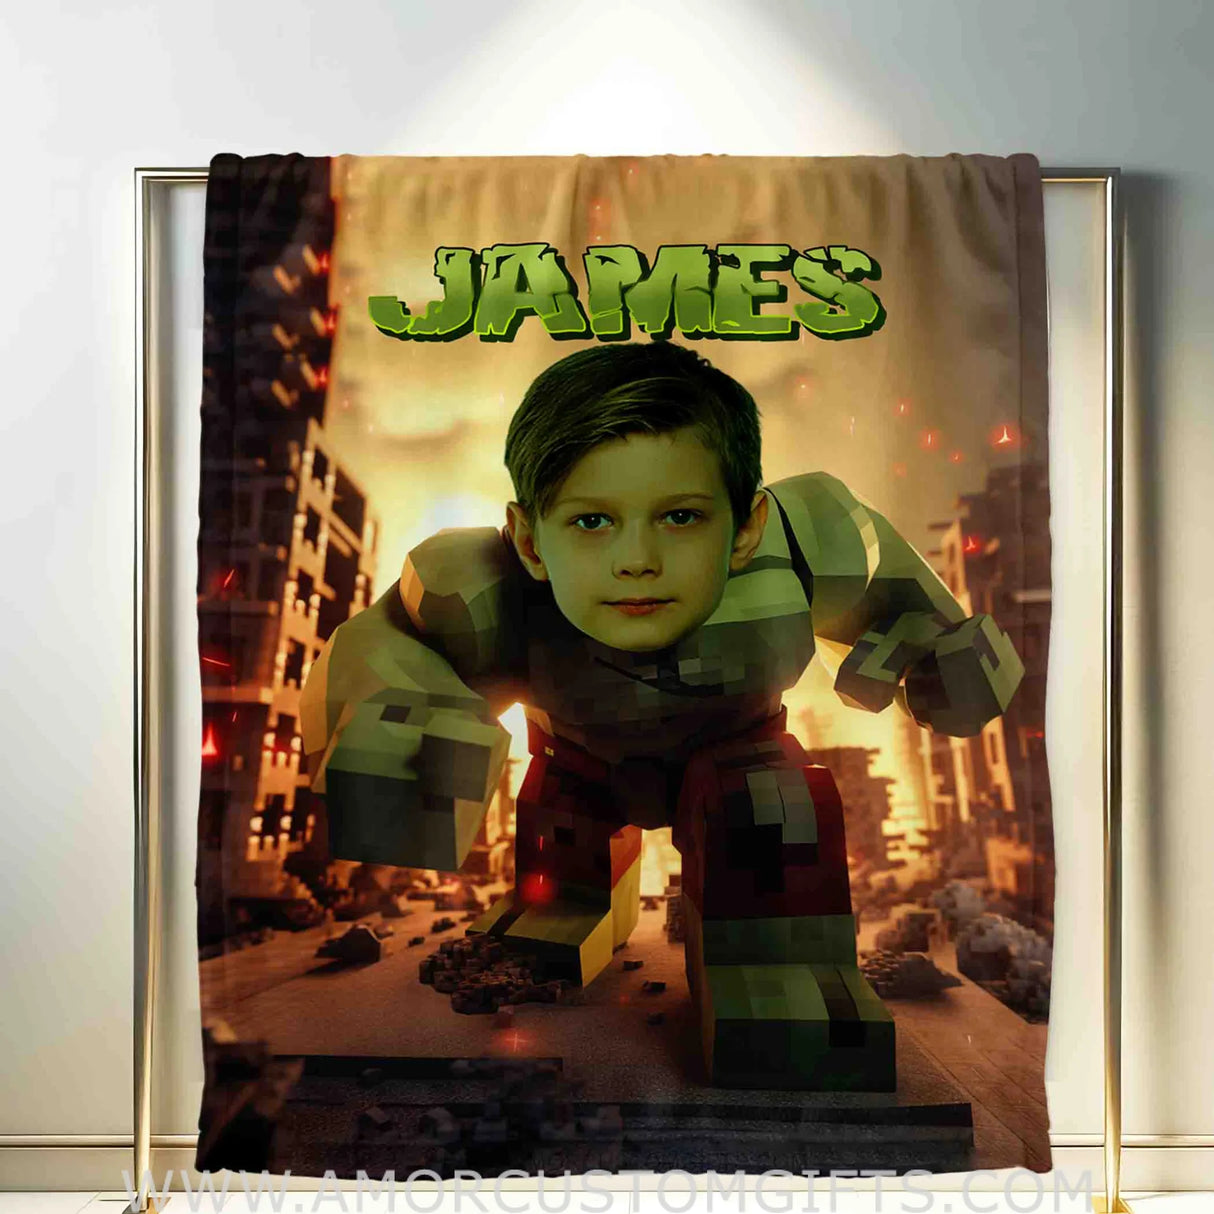 Blankets Personalized Minecraft Green Monster Blanket | Custom Name & Face Boy Blanket